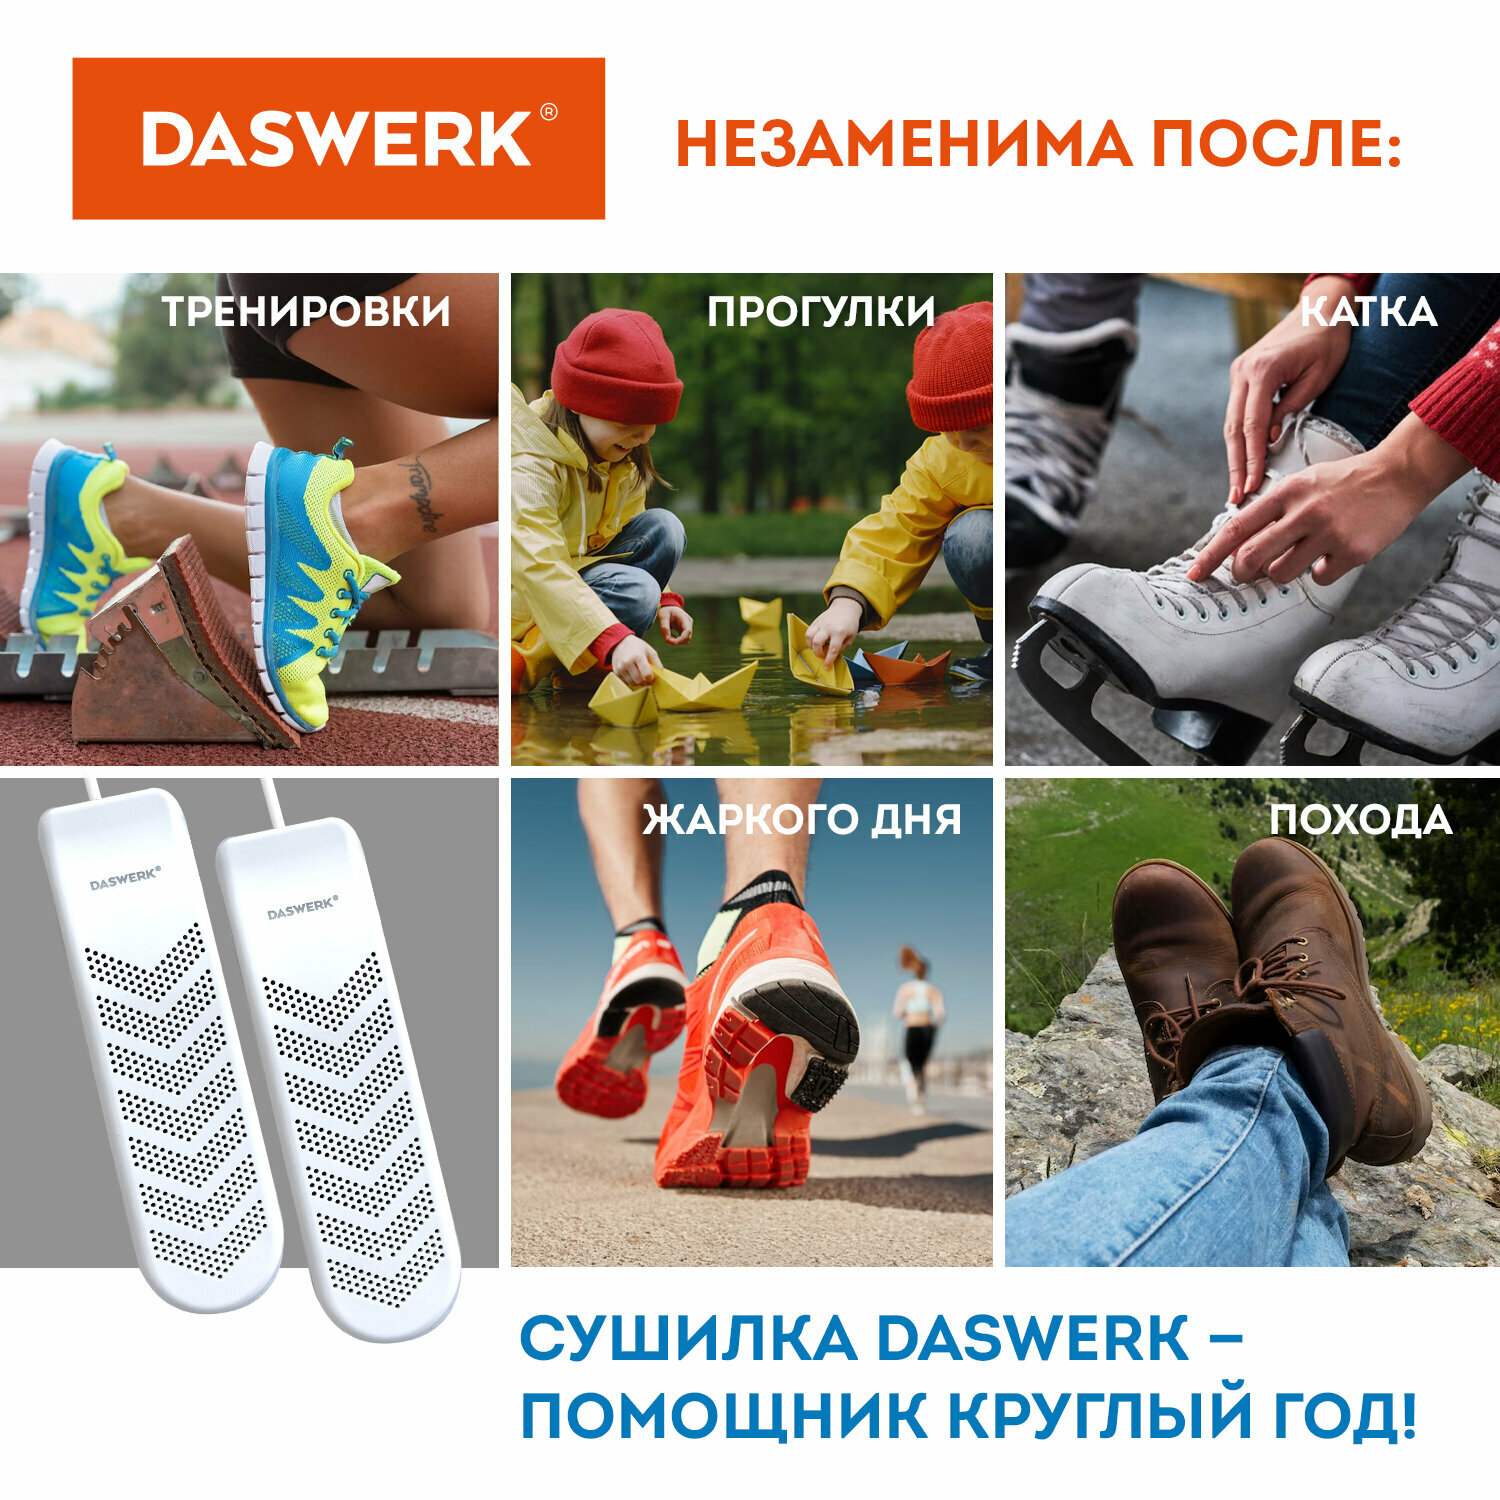 Cушилка для обуви, электрическая (сушка, электросушилка) от запаха с таймером, Usb-разъём, 9 Вт, Daswerk, Sd9, 456202 - фотография № 8